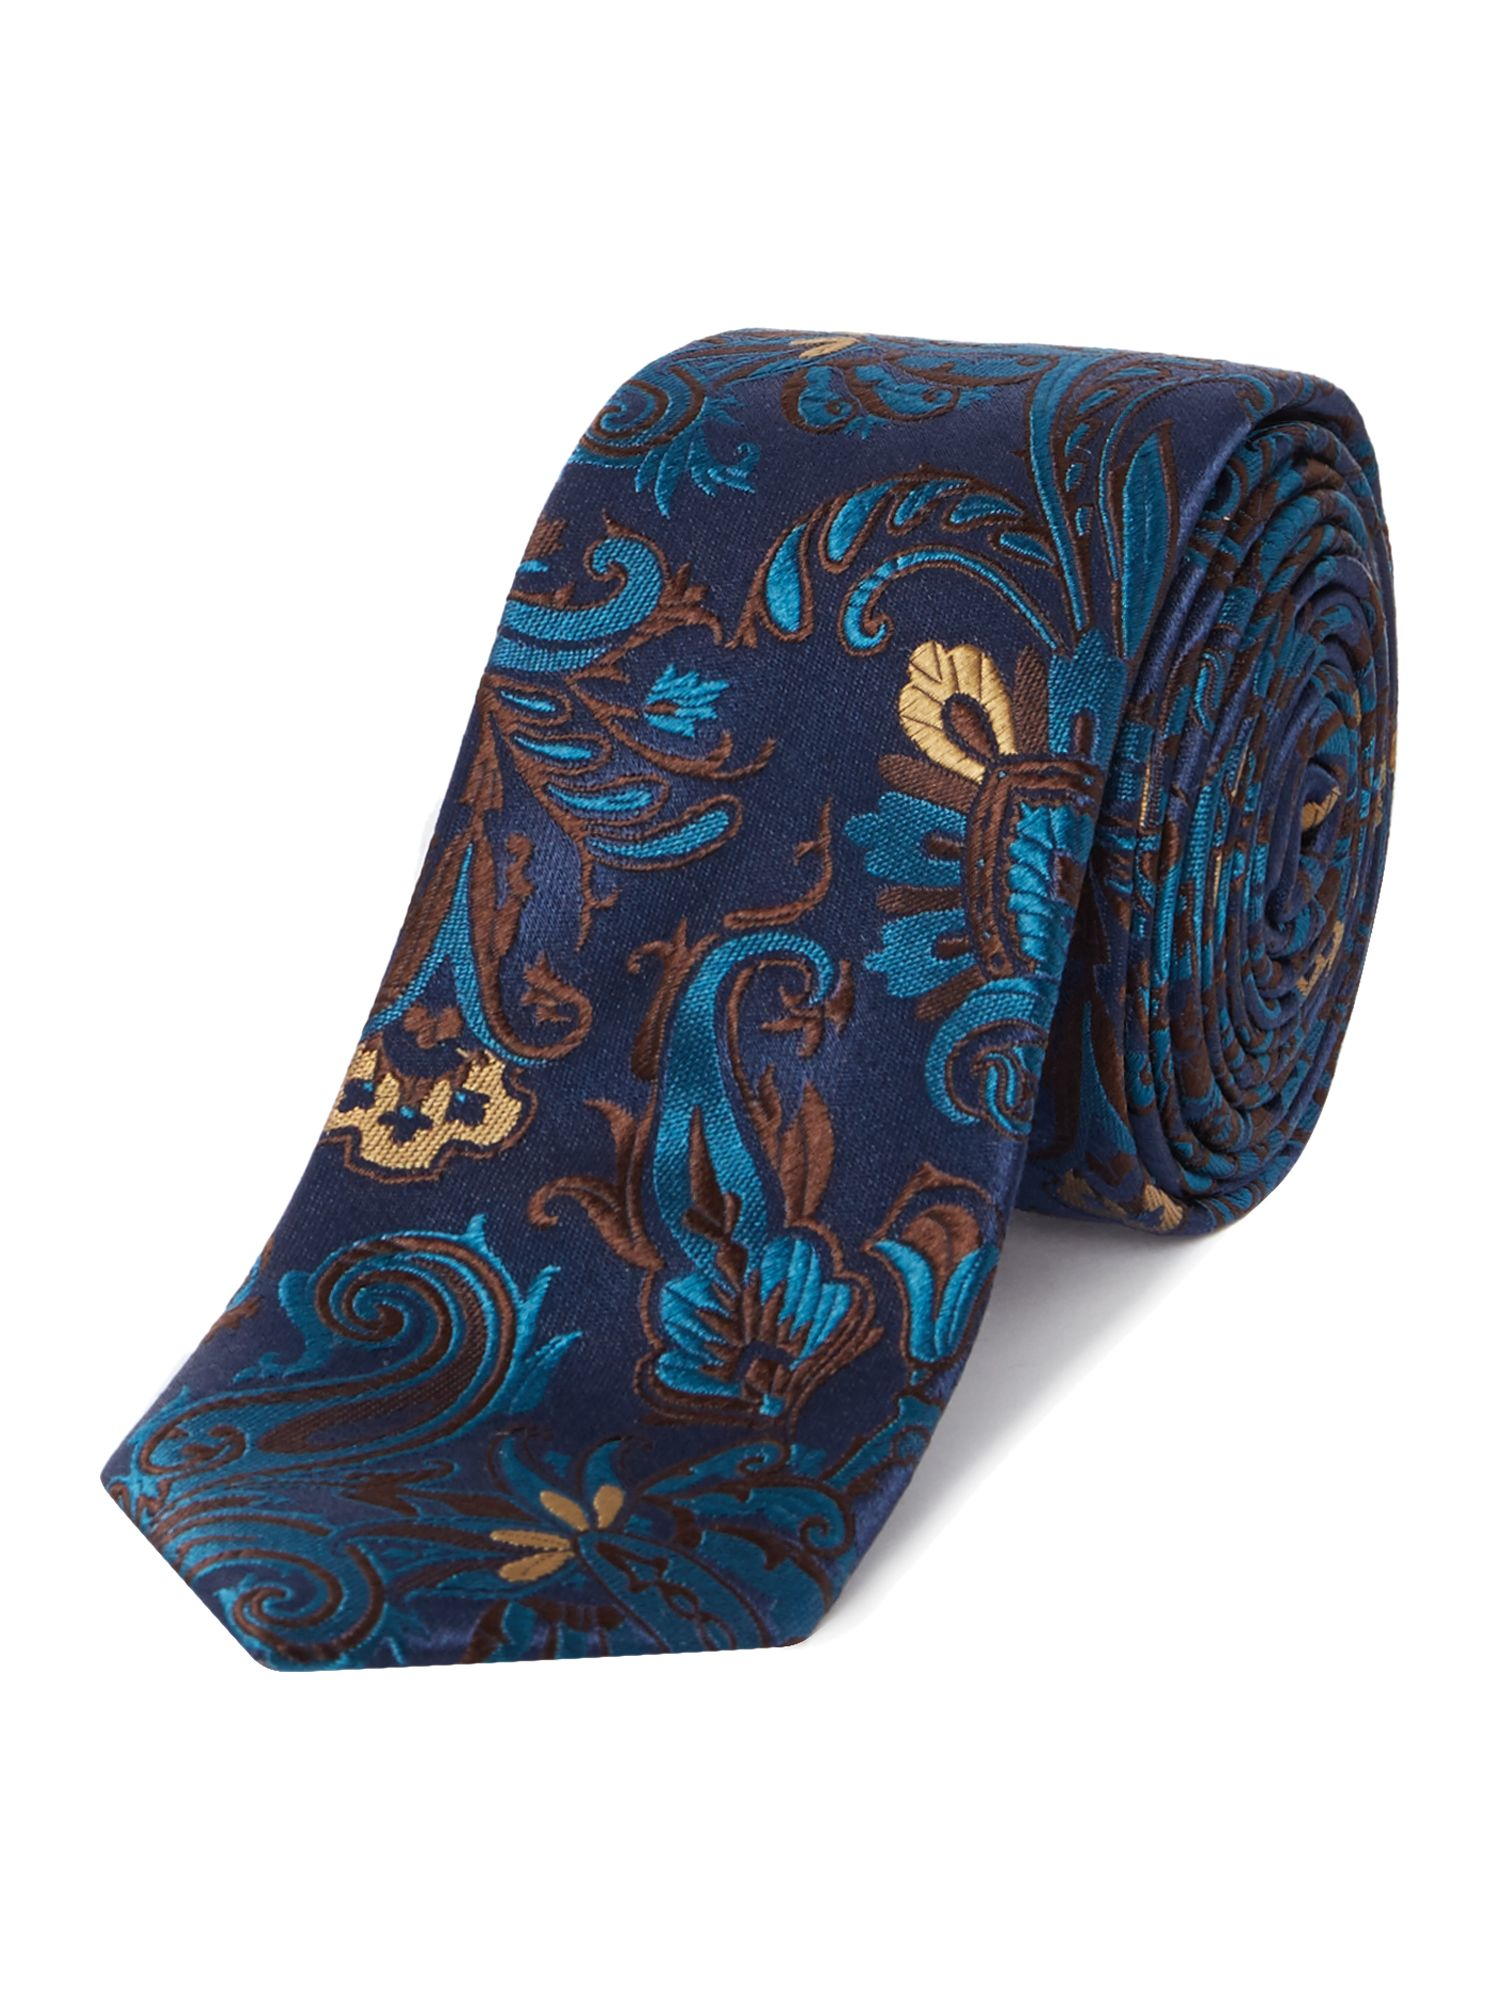 Ted baker Patterned Tie in Blue for Men | Lyst